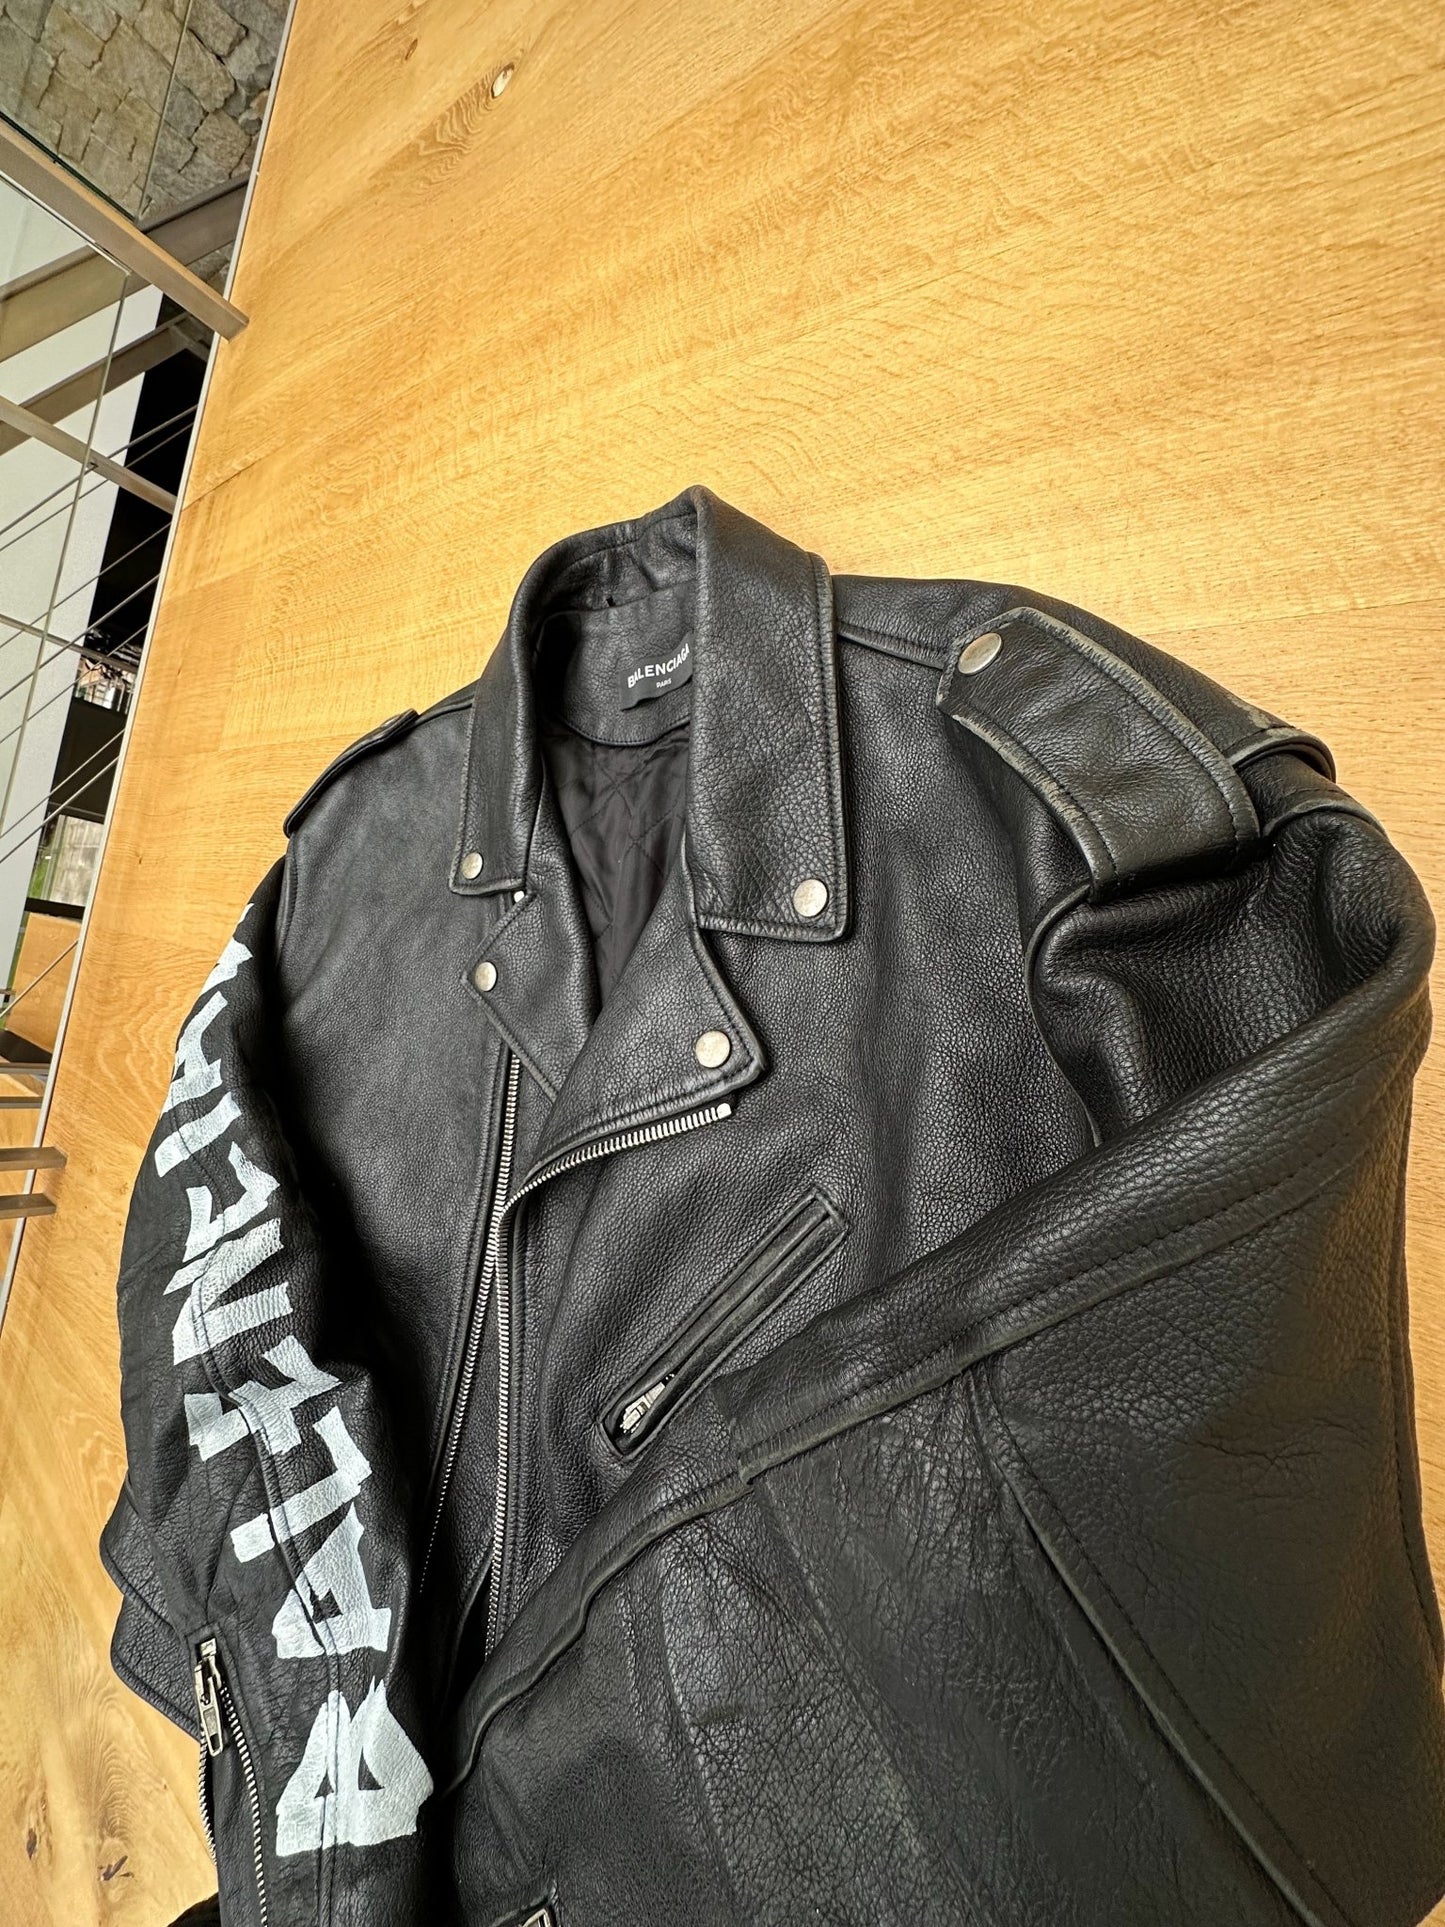 BALENCIAGA graffiti biker leather jacket - six__pistols designer fashion items